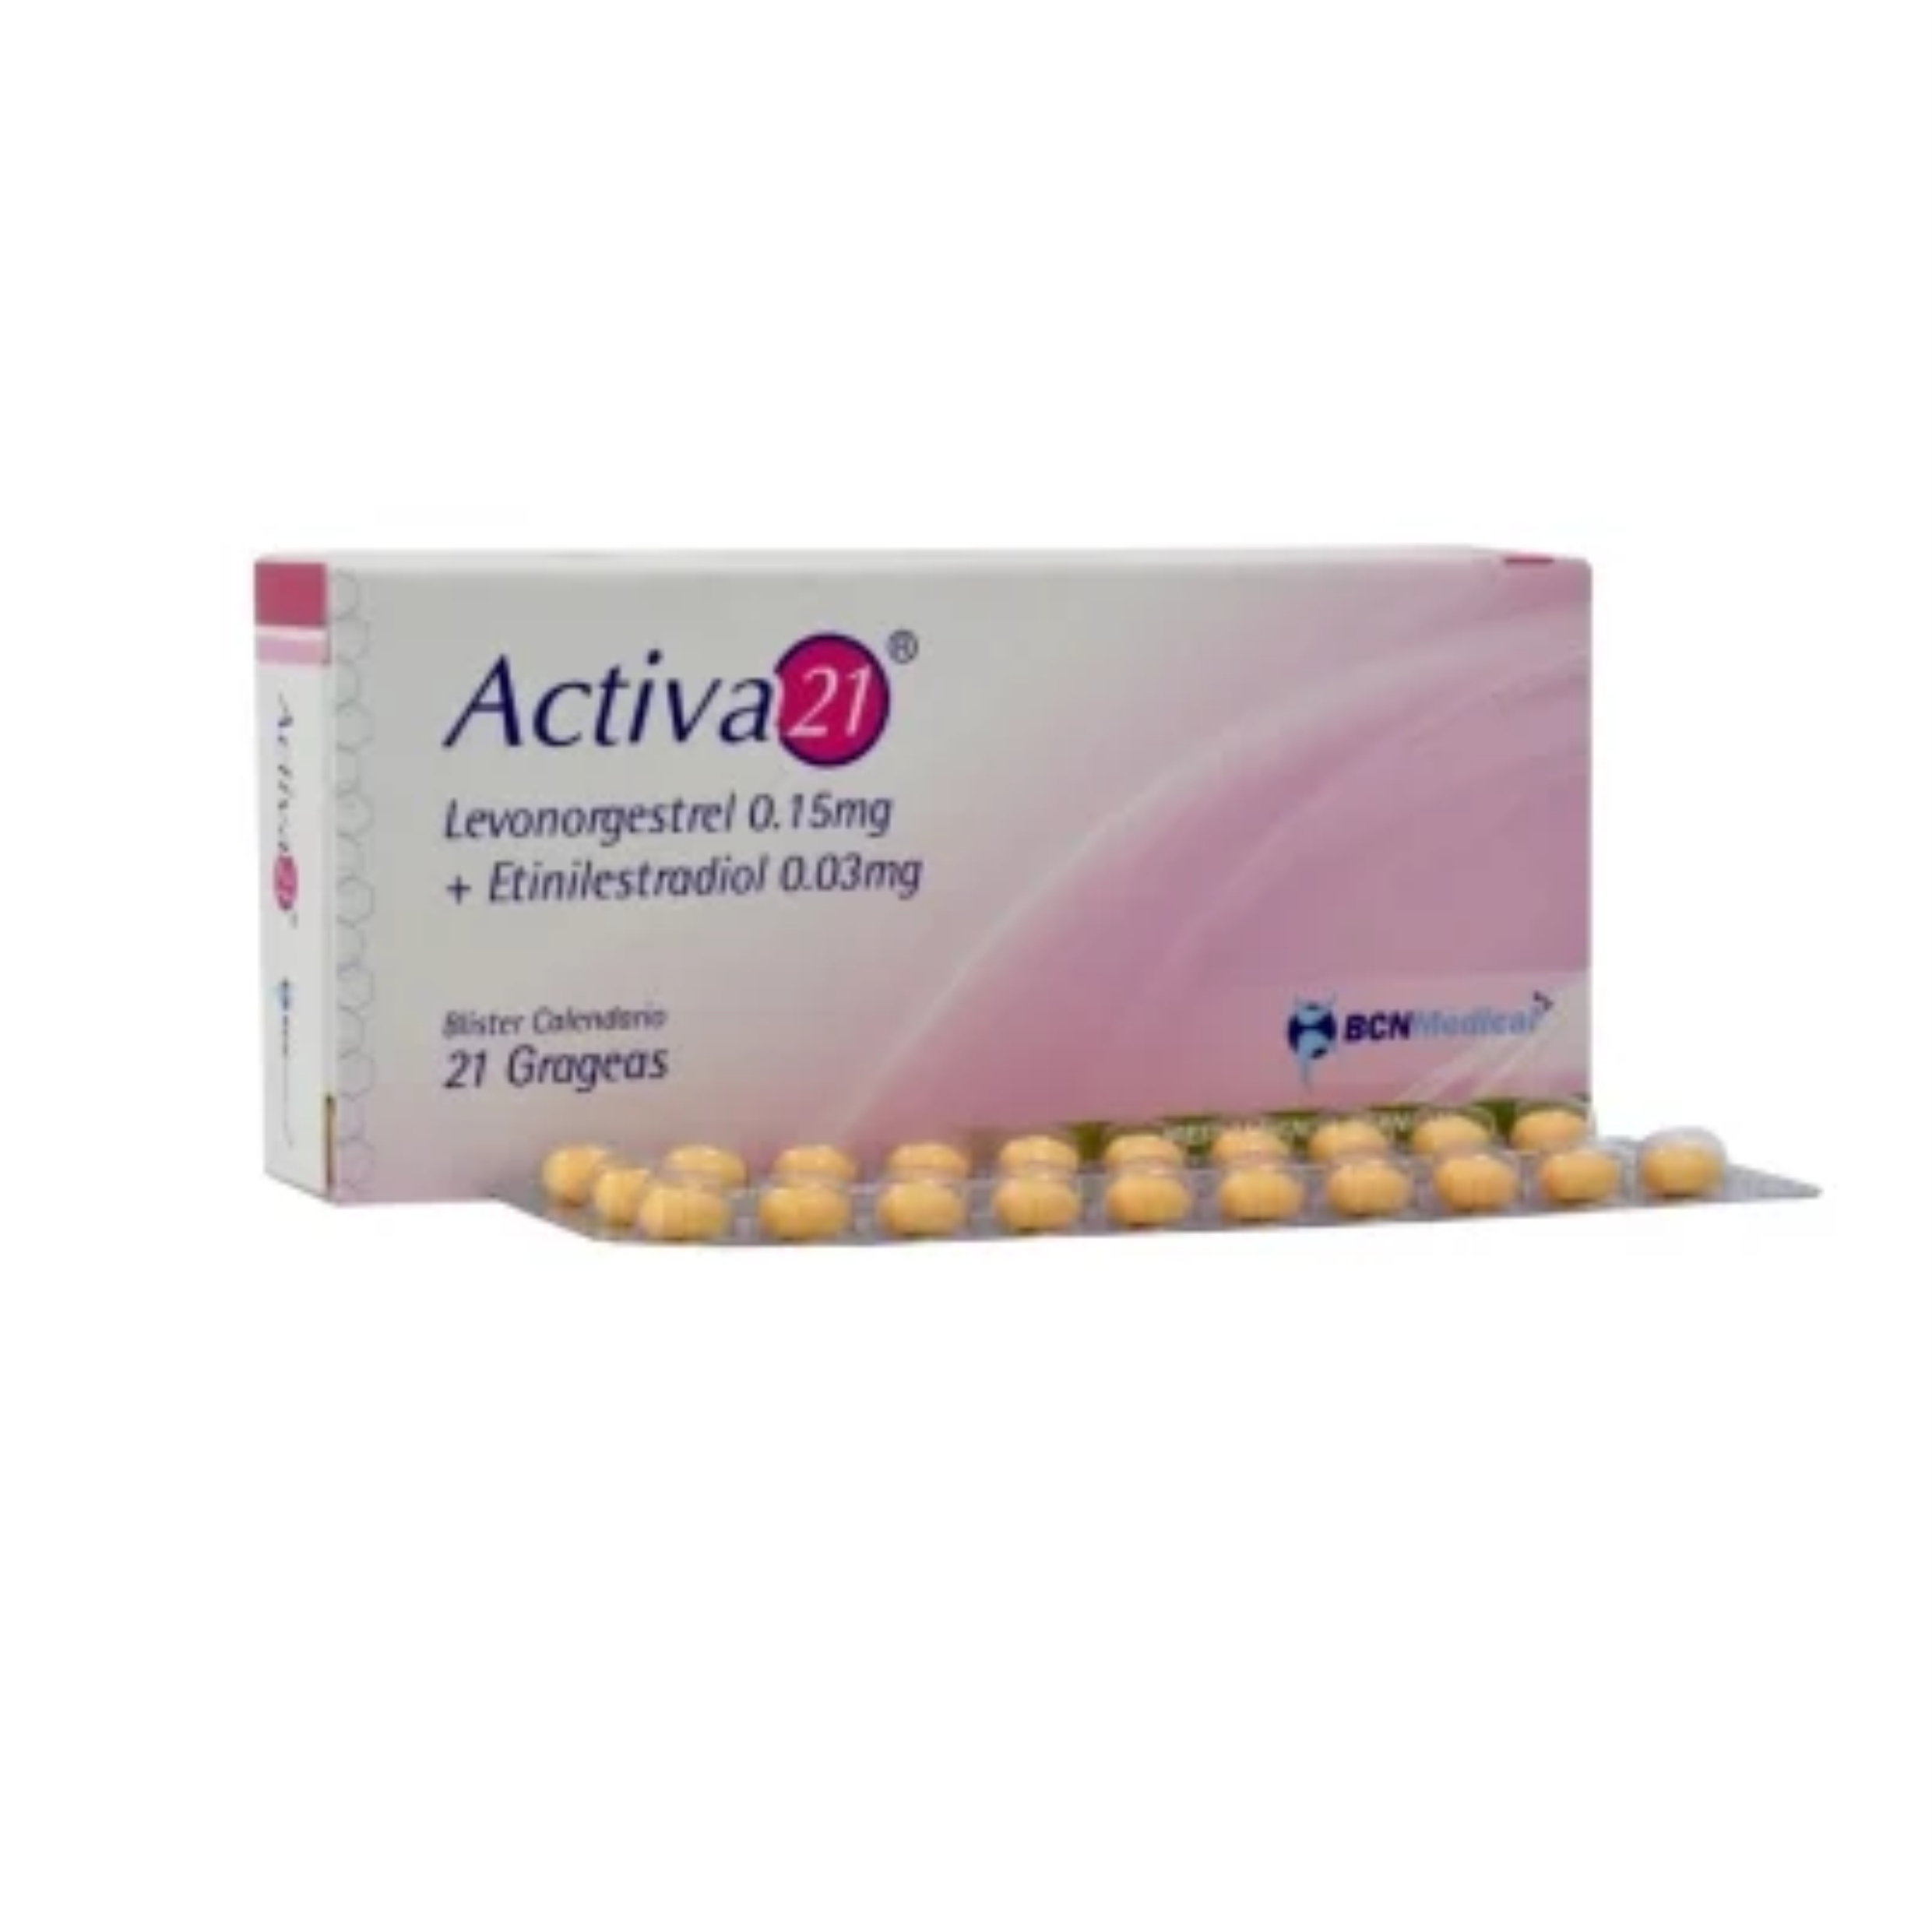 Activa 21 levonorgestrel 0.15mg+Etinilestradiol 0.03 mg Caja x 21 Grageas